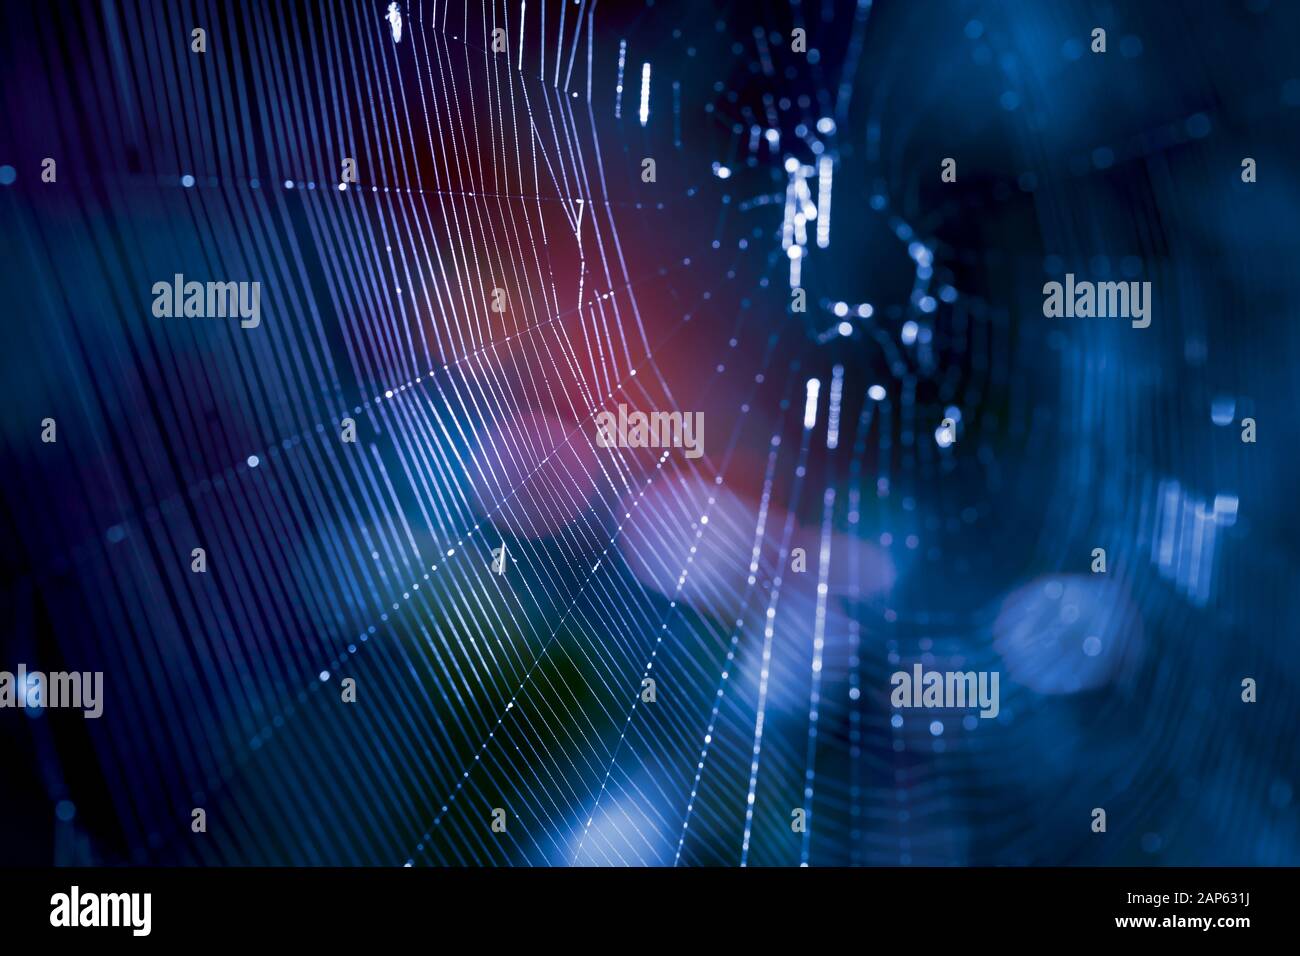 Beauty design Spinnennetz Spinnennetz blau Makro Hintergrund cobweb Technologie hacker-stock Bild Stockfoto